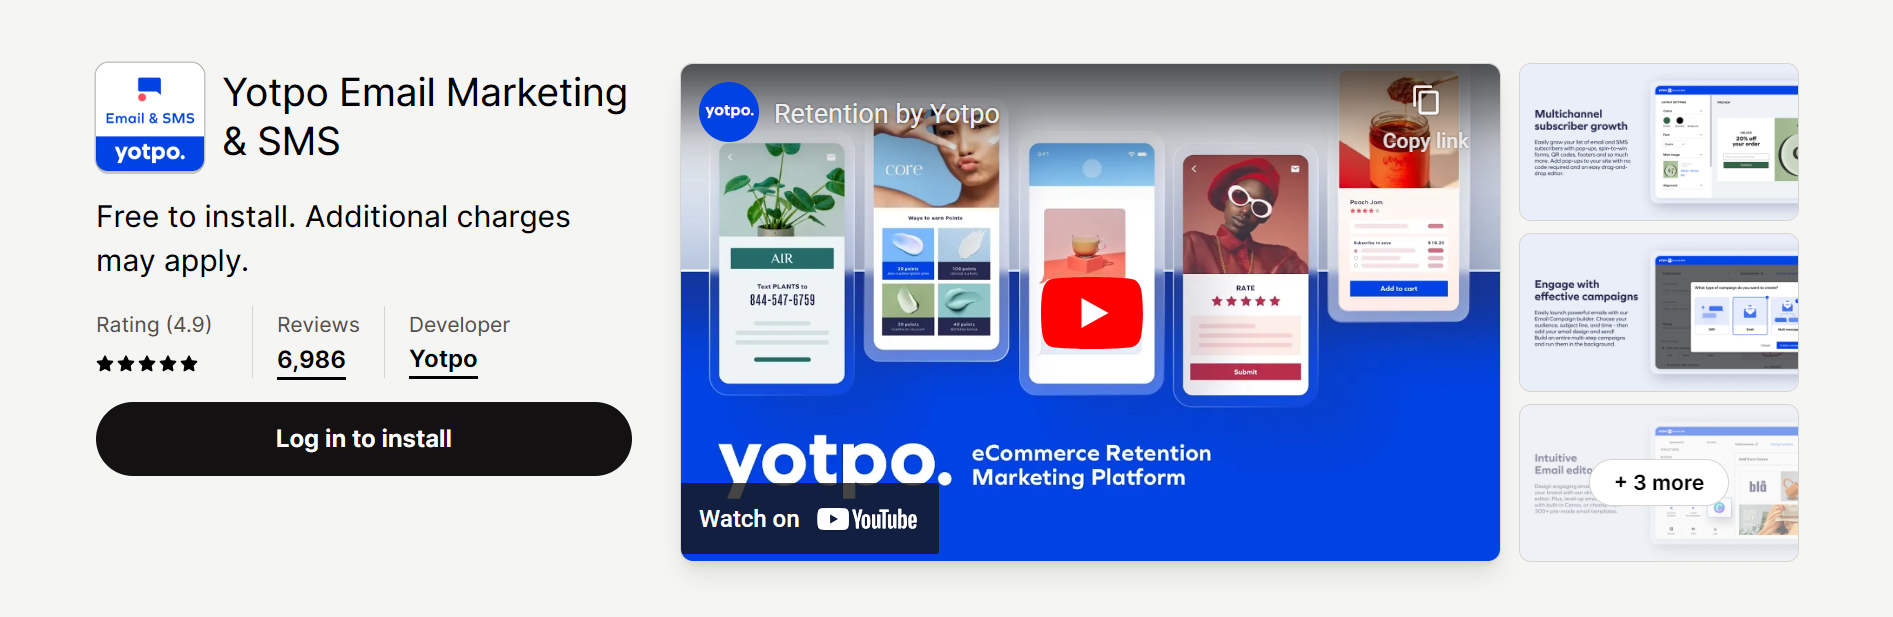 Yotpo Email Marketing & SMS